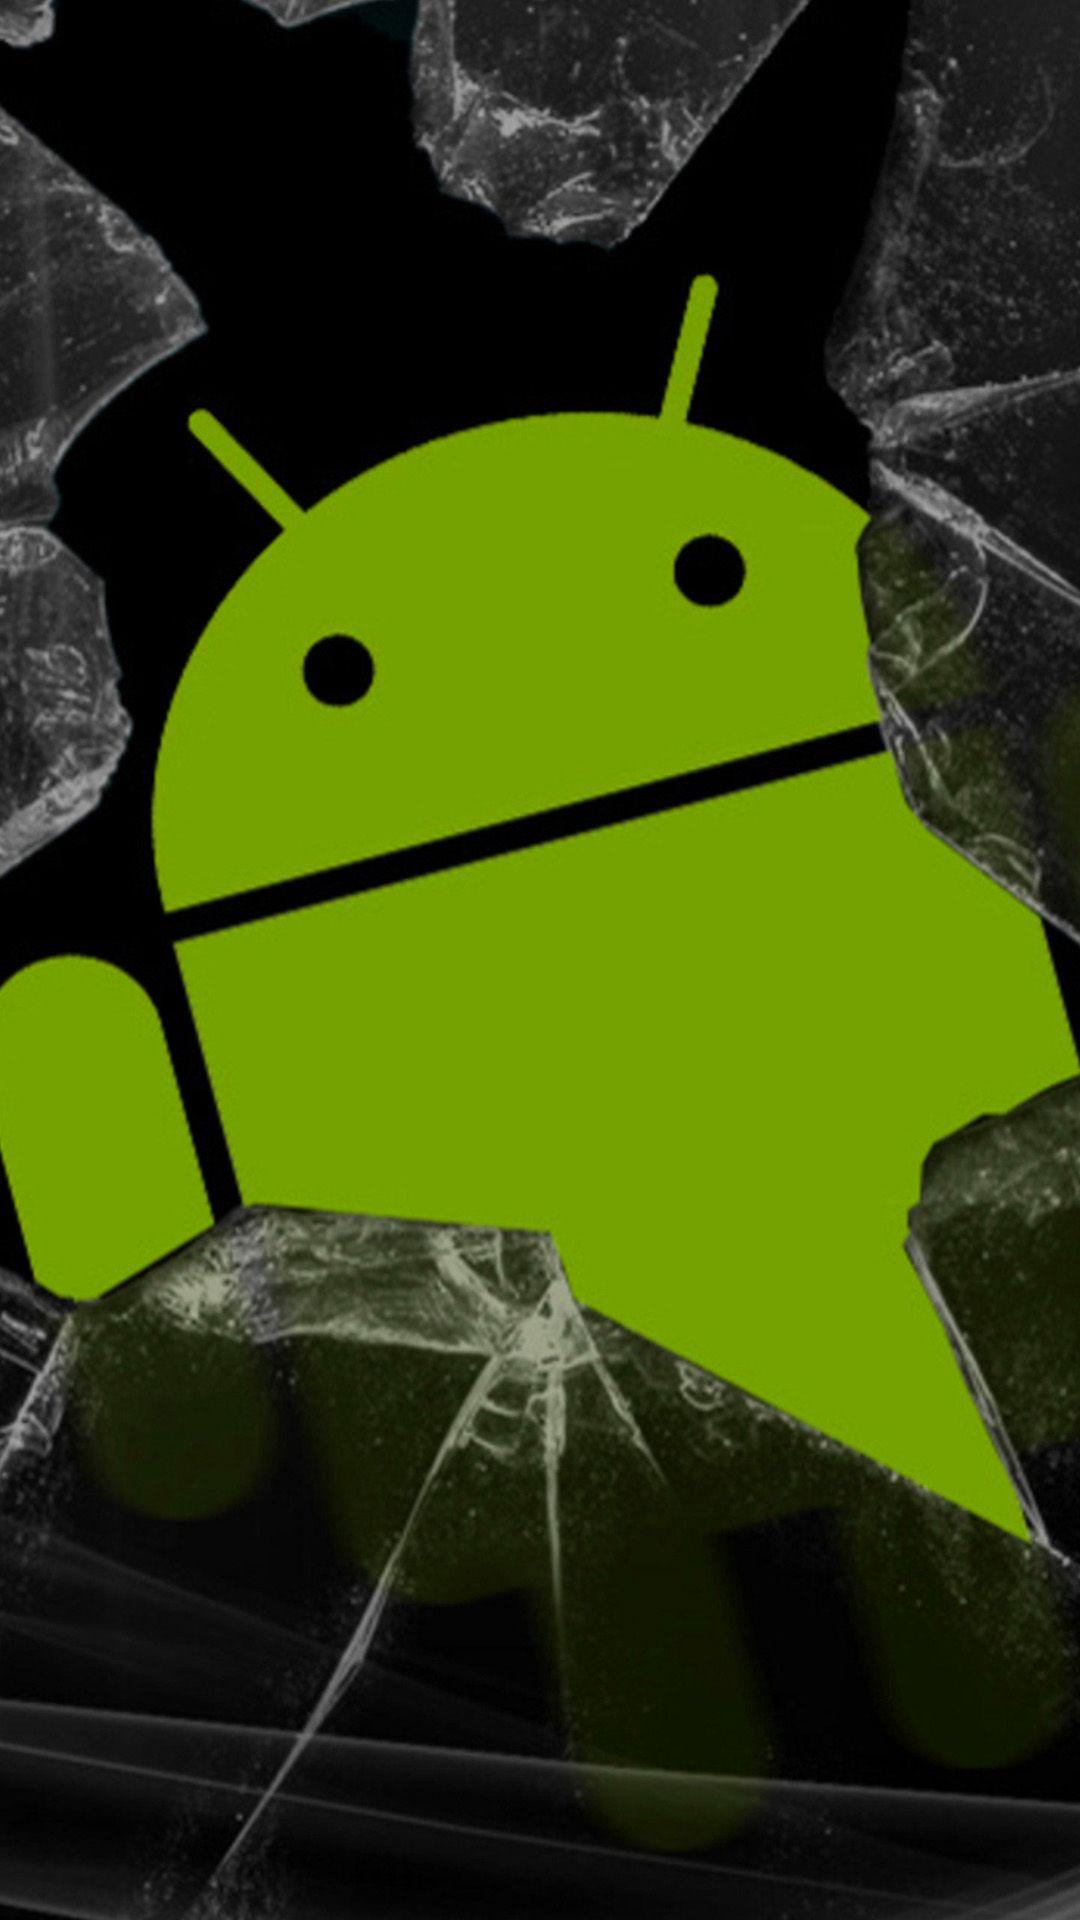 Android LOGO 47 Galaxy S5 Wallpaper HD